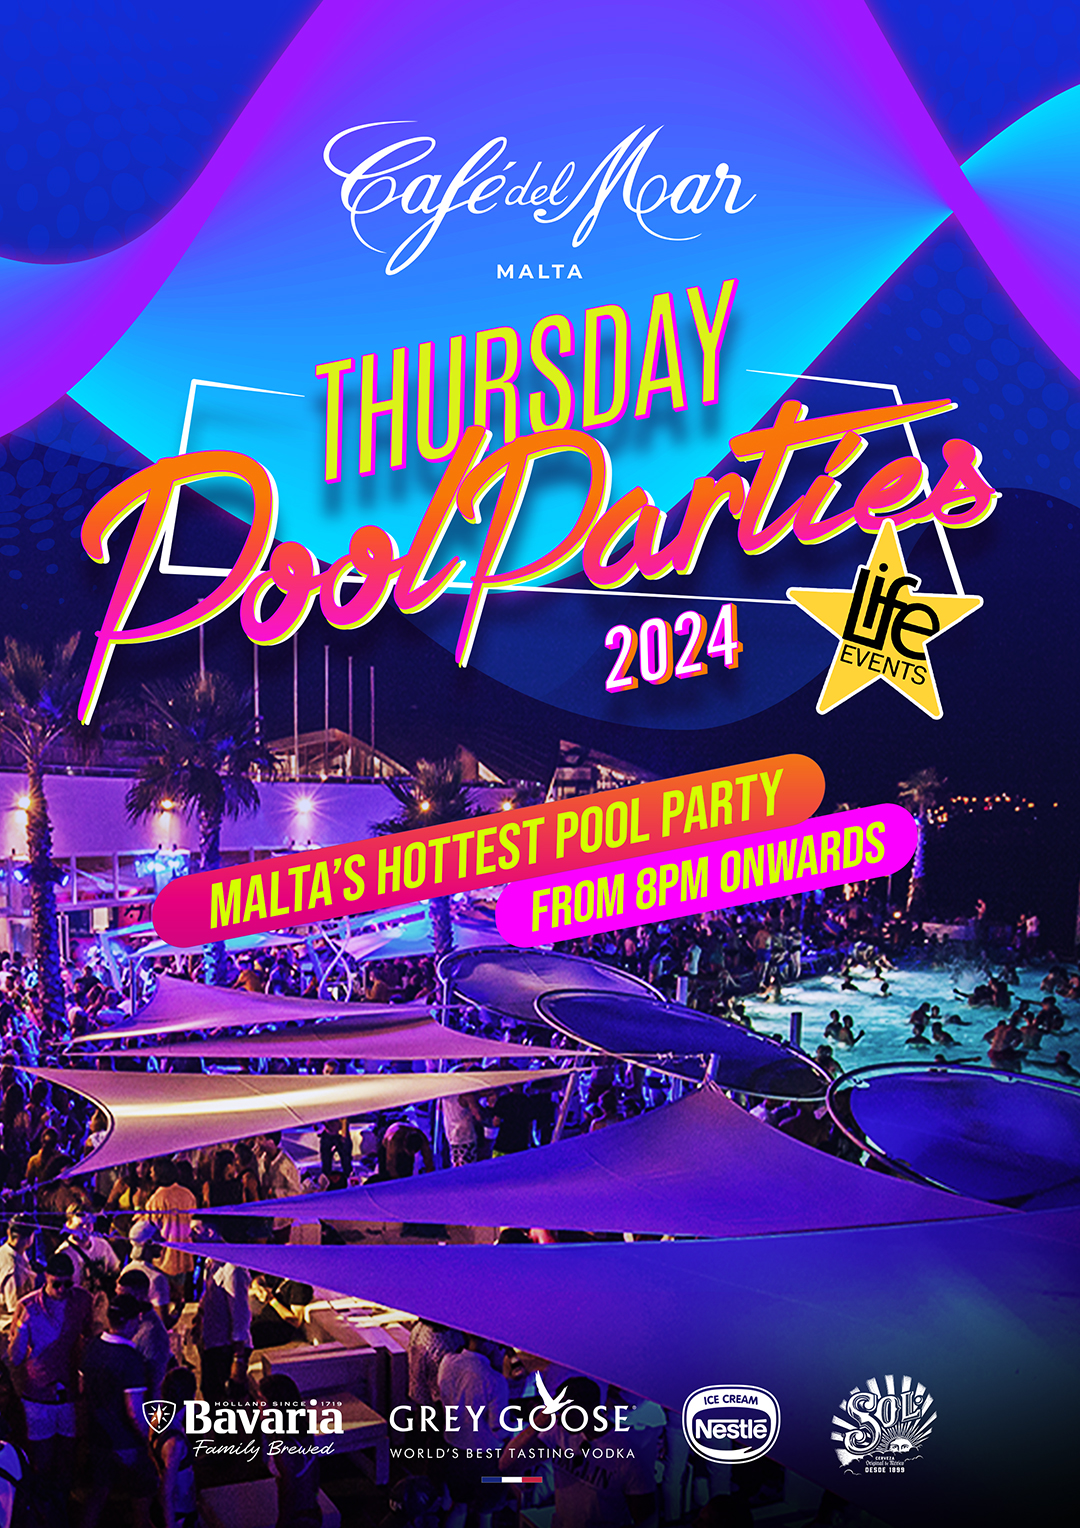 Café Del Mar - Thursday Pool Parties - by Life Events poster